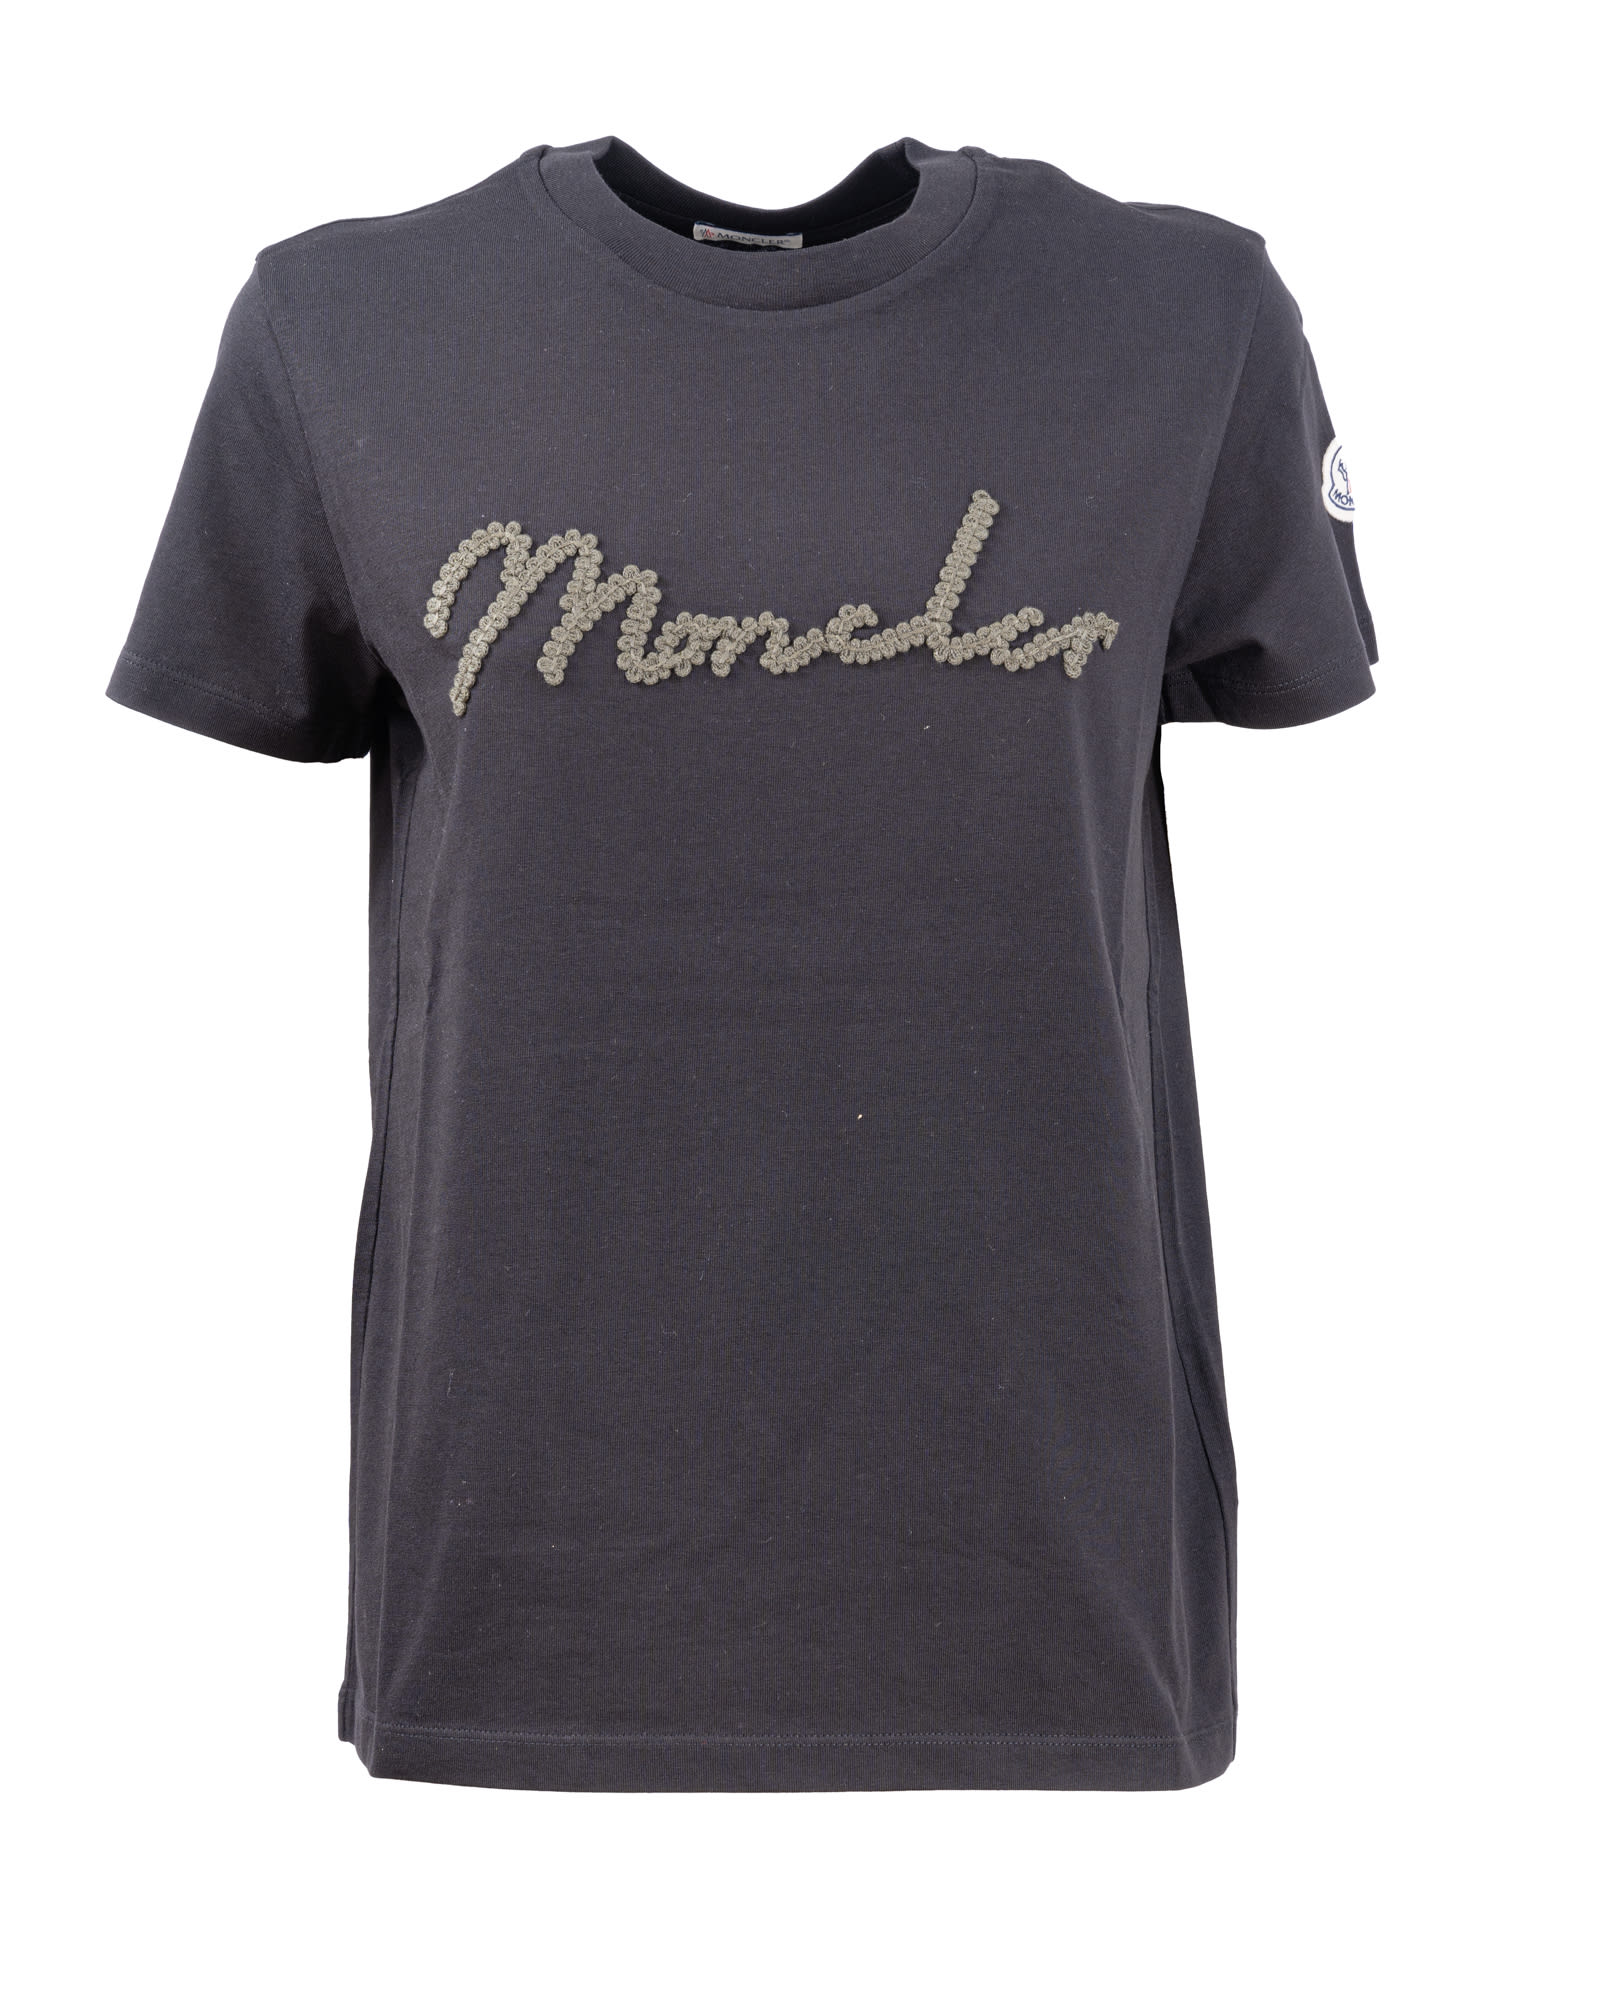 Moncler T-shirt made of cotton jersey